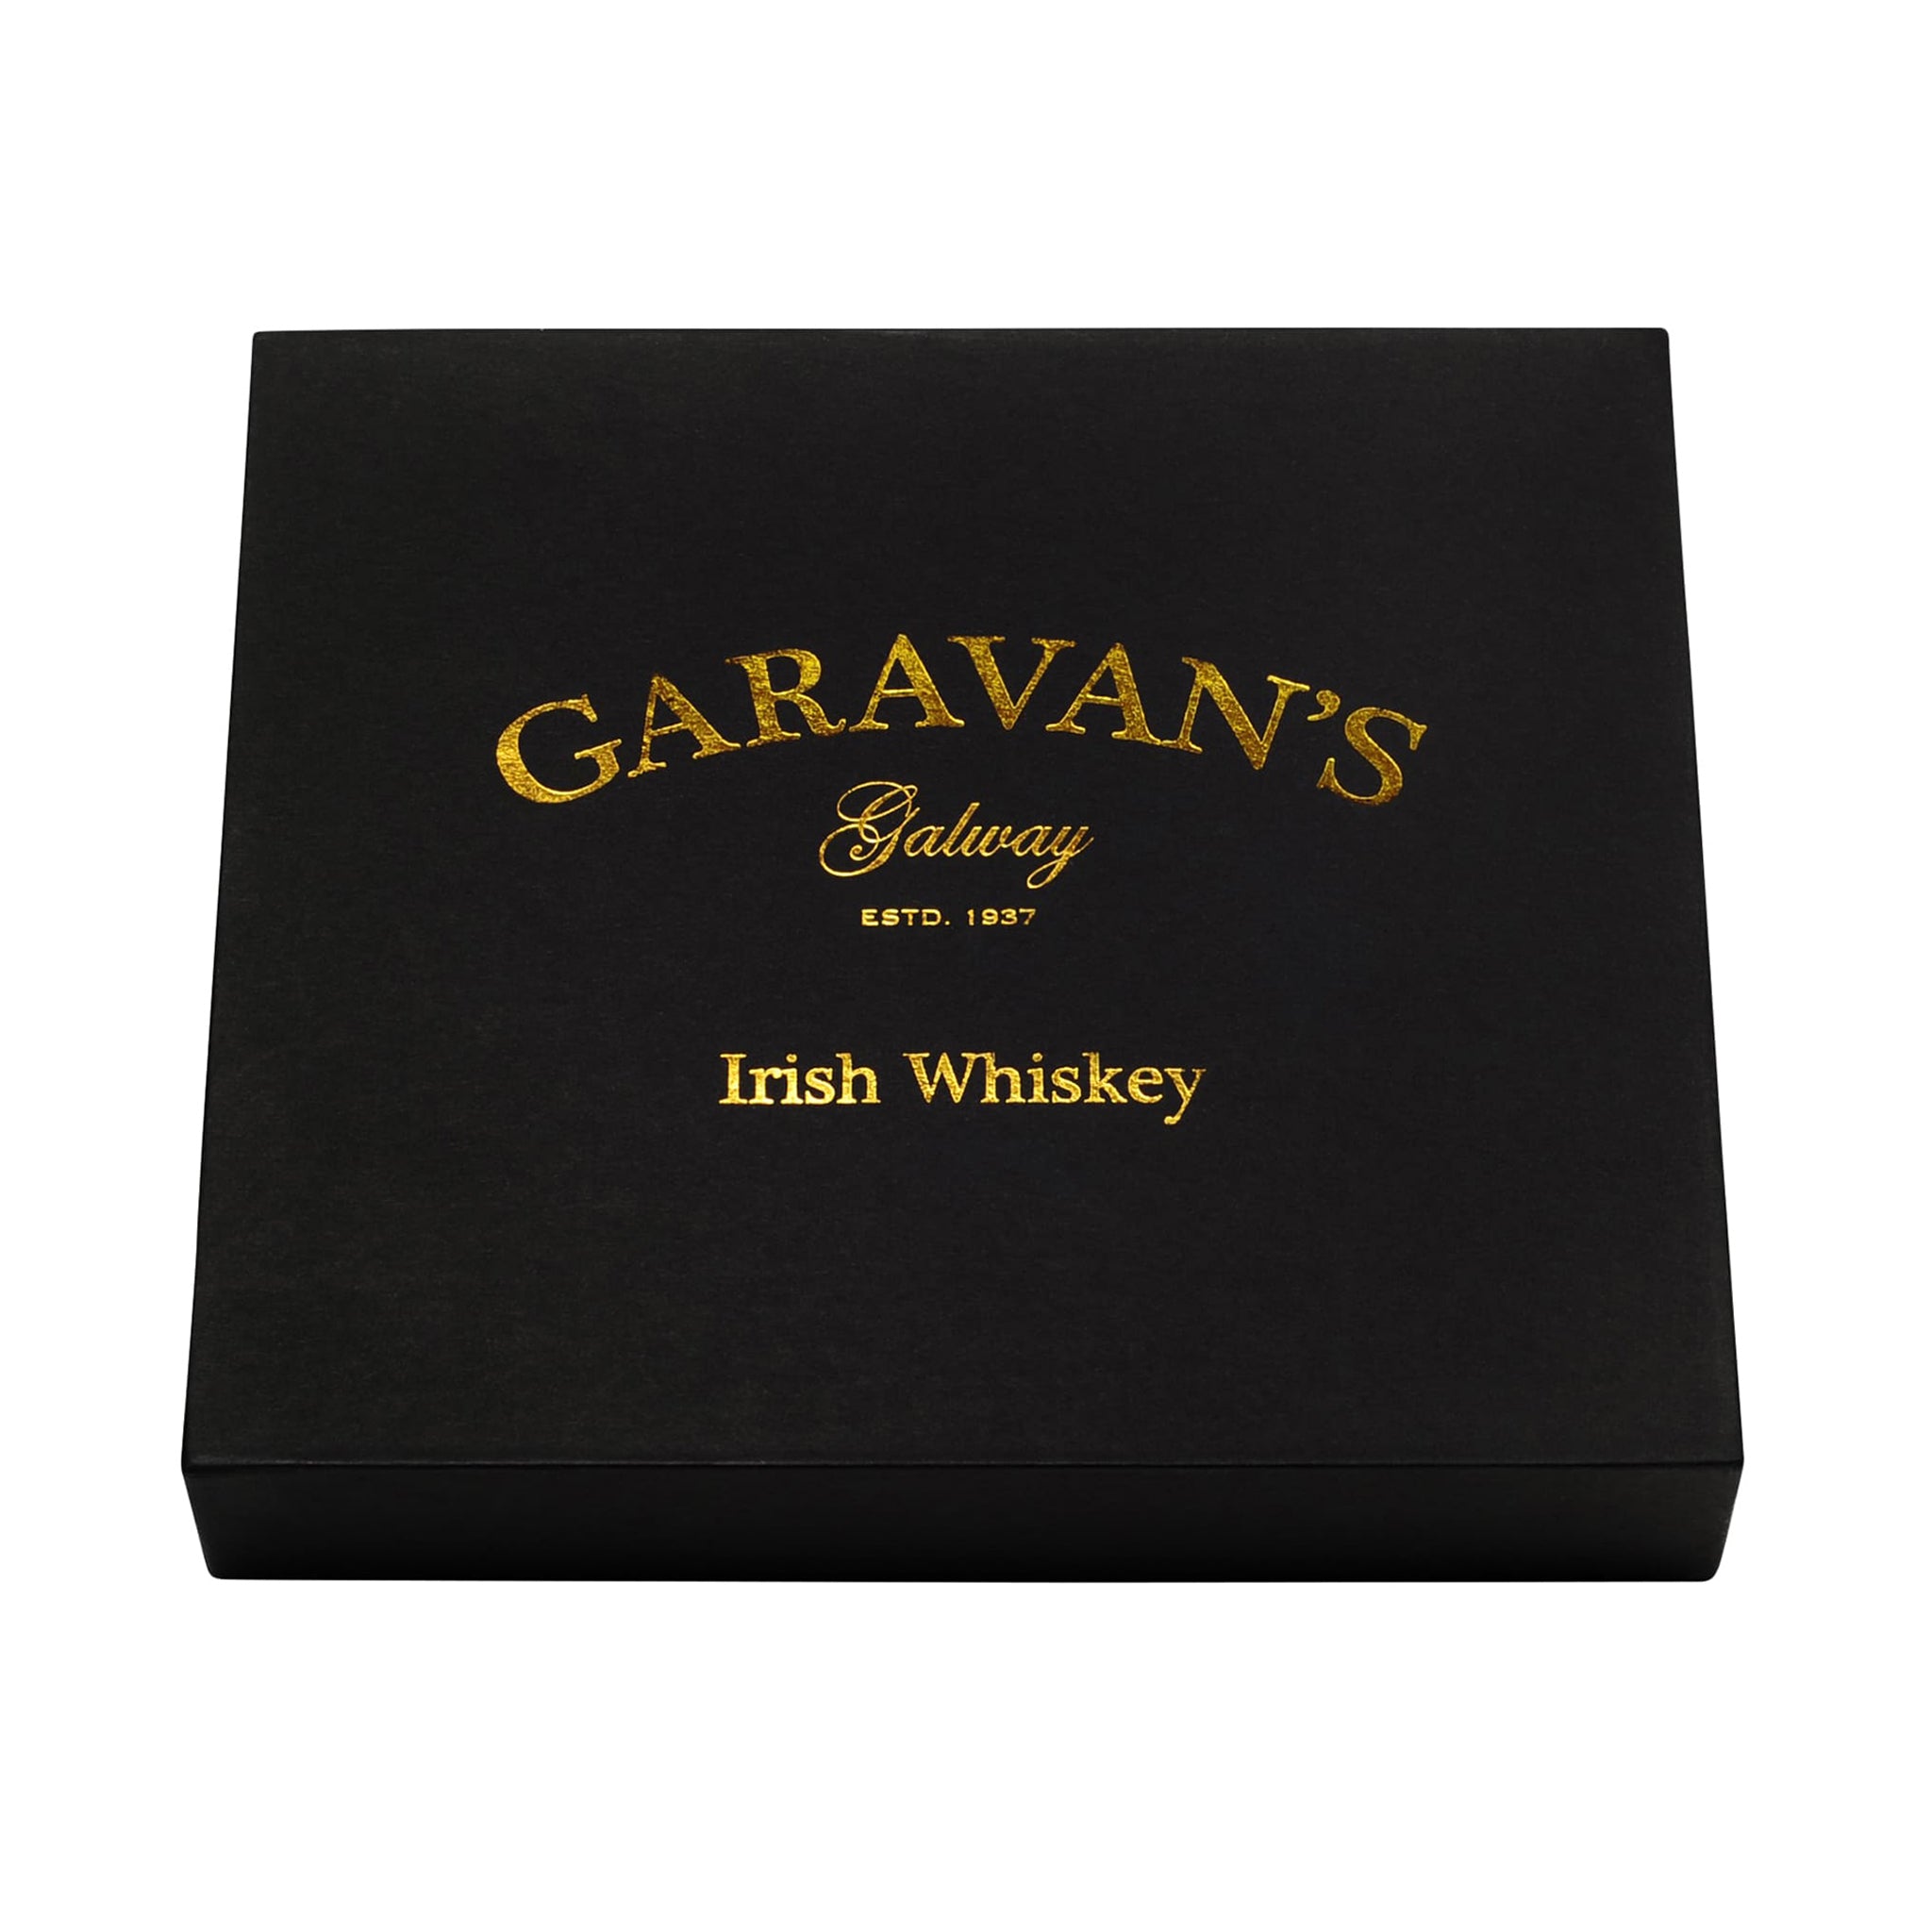 Garavan’s Whiskey Glass Set - Luxurious Gift for Whiskey Lovers - Expertly Crafted Irish Whiskey Glasses in Velvet-lined Gift Box